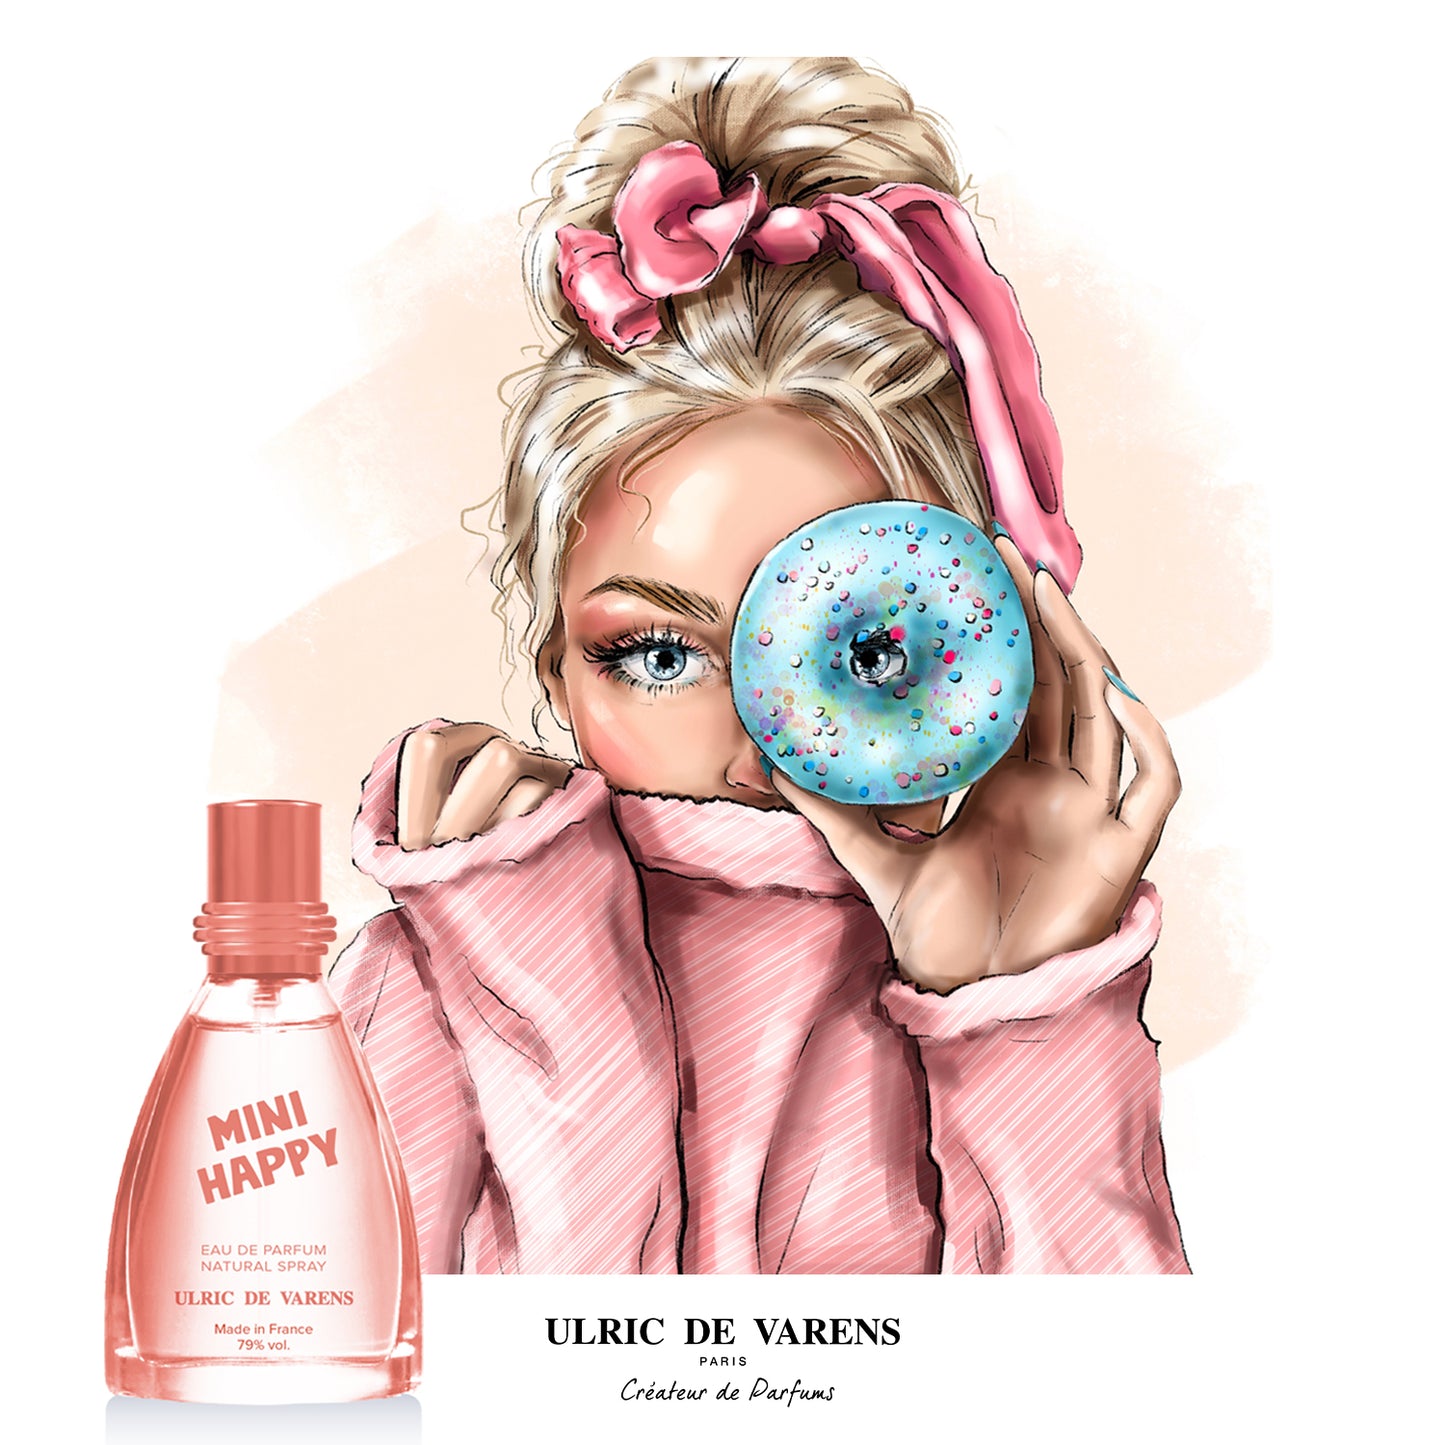 Varens Sweet MINI HAPPY - Eau De Parfum for Women - Fruity, Bubbly, Cheerful Aroma - Raspberry, Peach, & Hazelnut- Travel Size - .9 Fl Oz